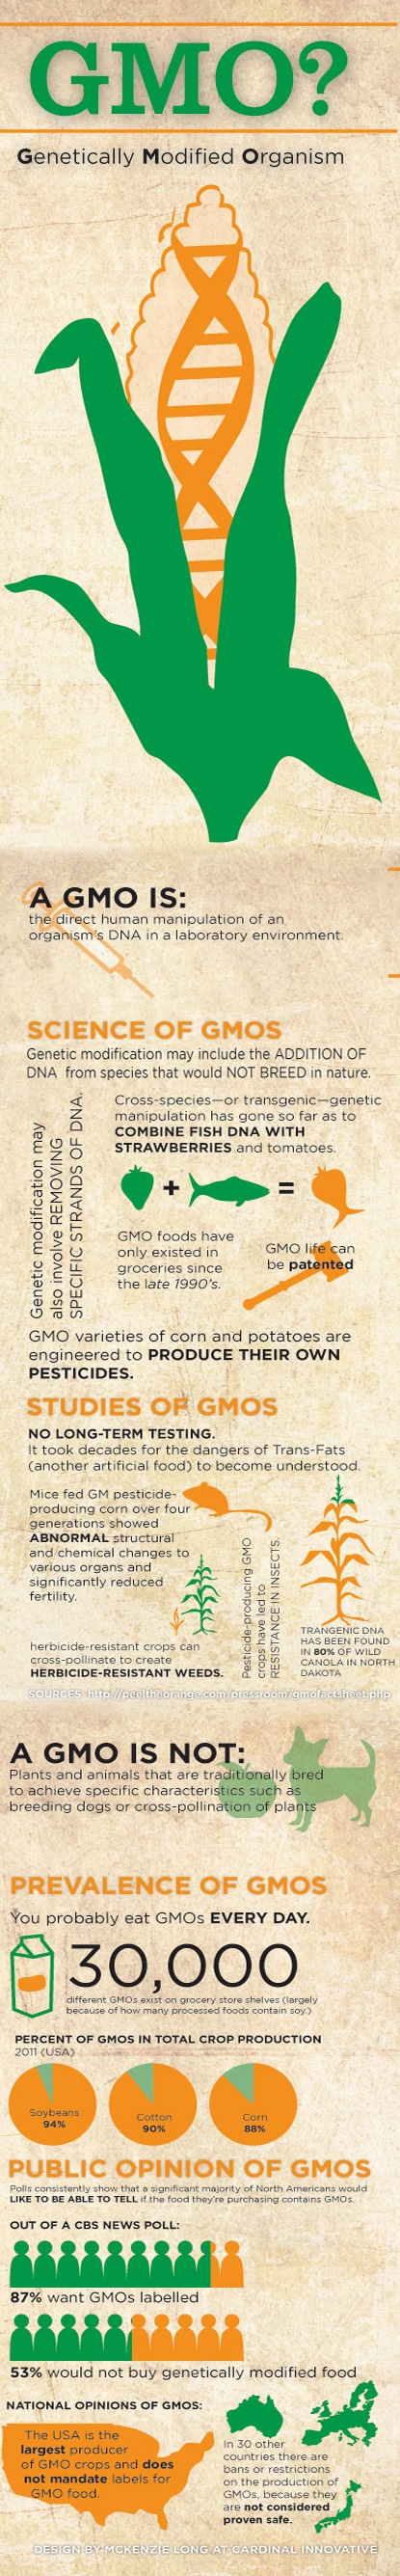 gmo-statistics-infographic-greenjoyment